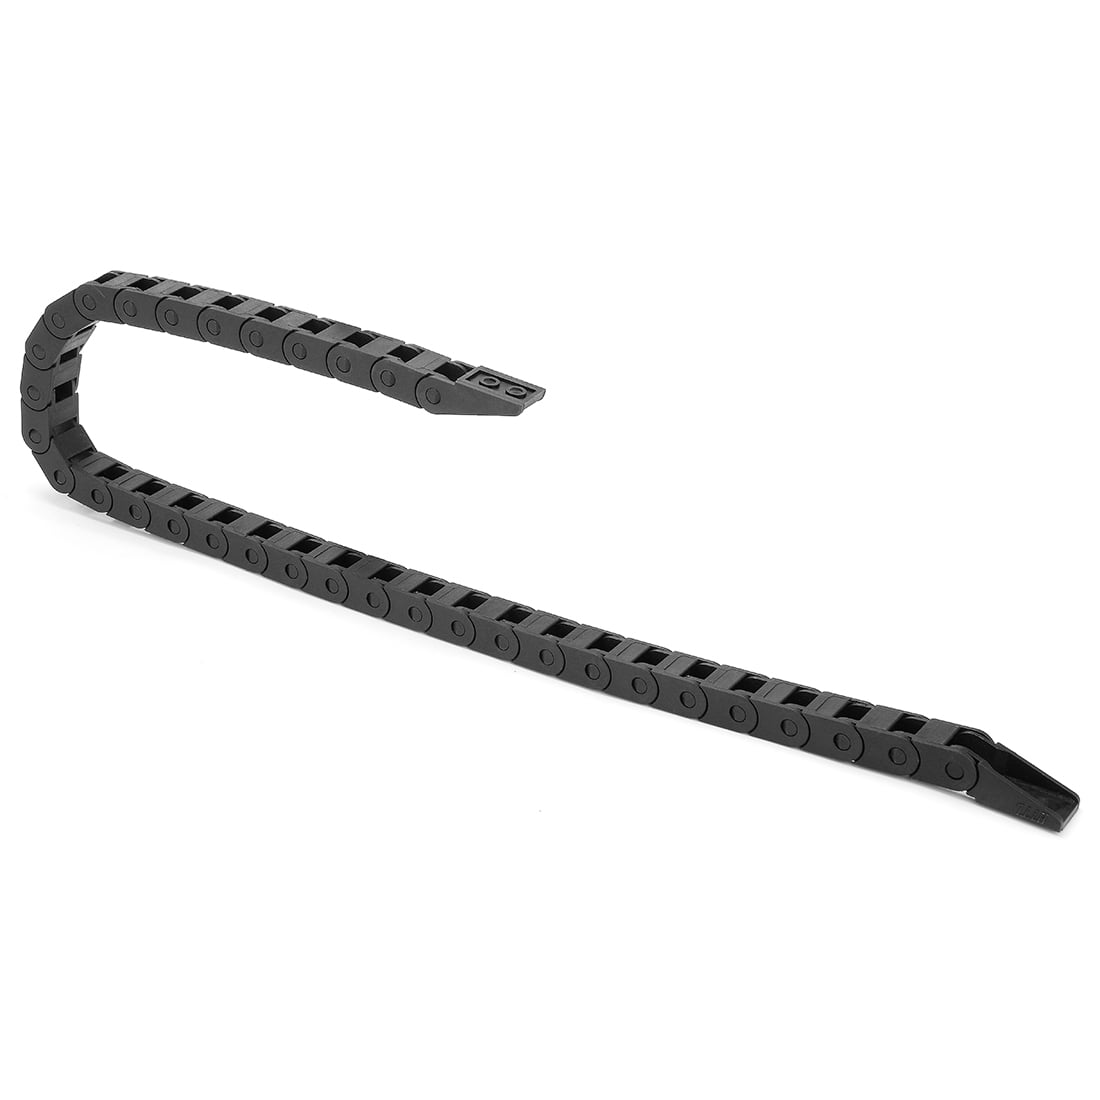 CNCCANEN 2m 25mm x 77mm Black Plastic Open Type Cable Drag Chain Wire Carrier R55 for CNC DIY